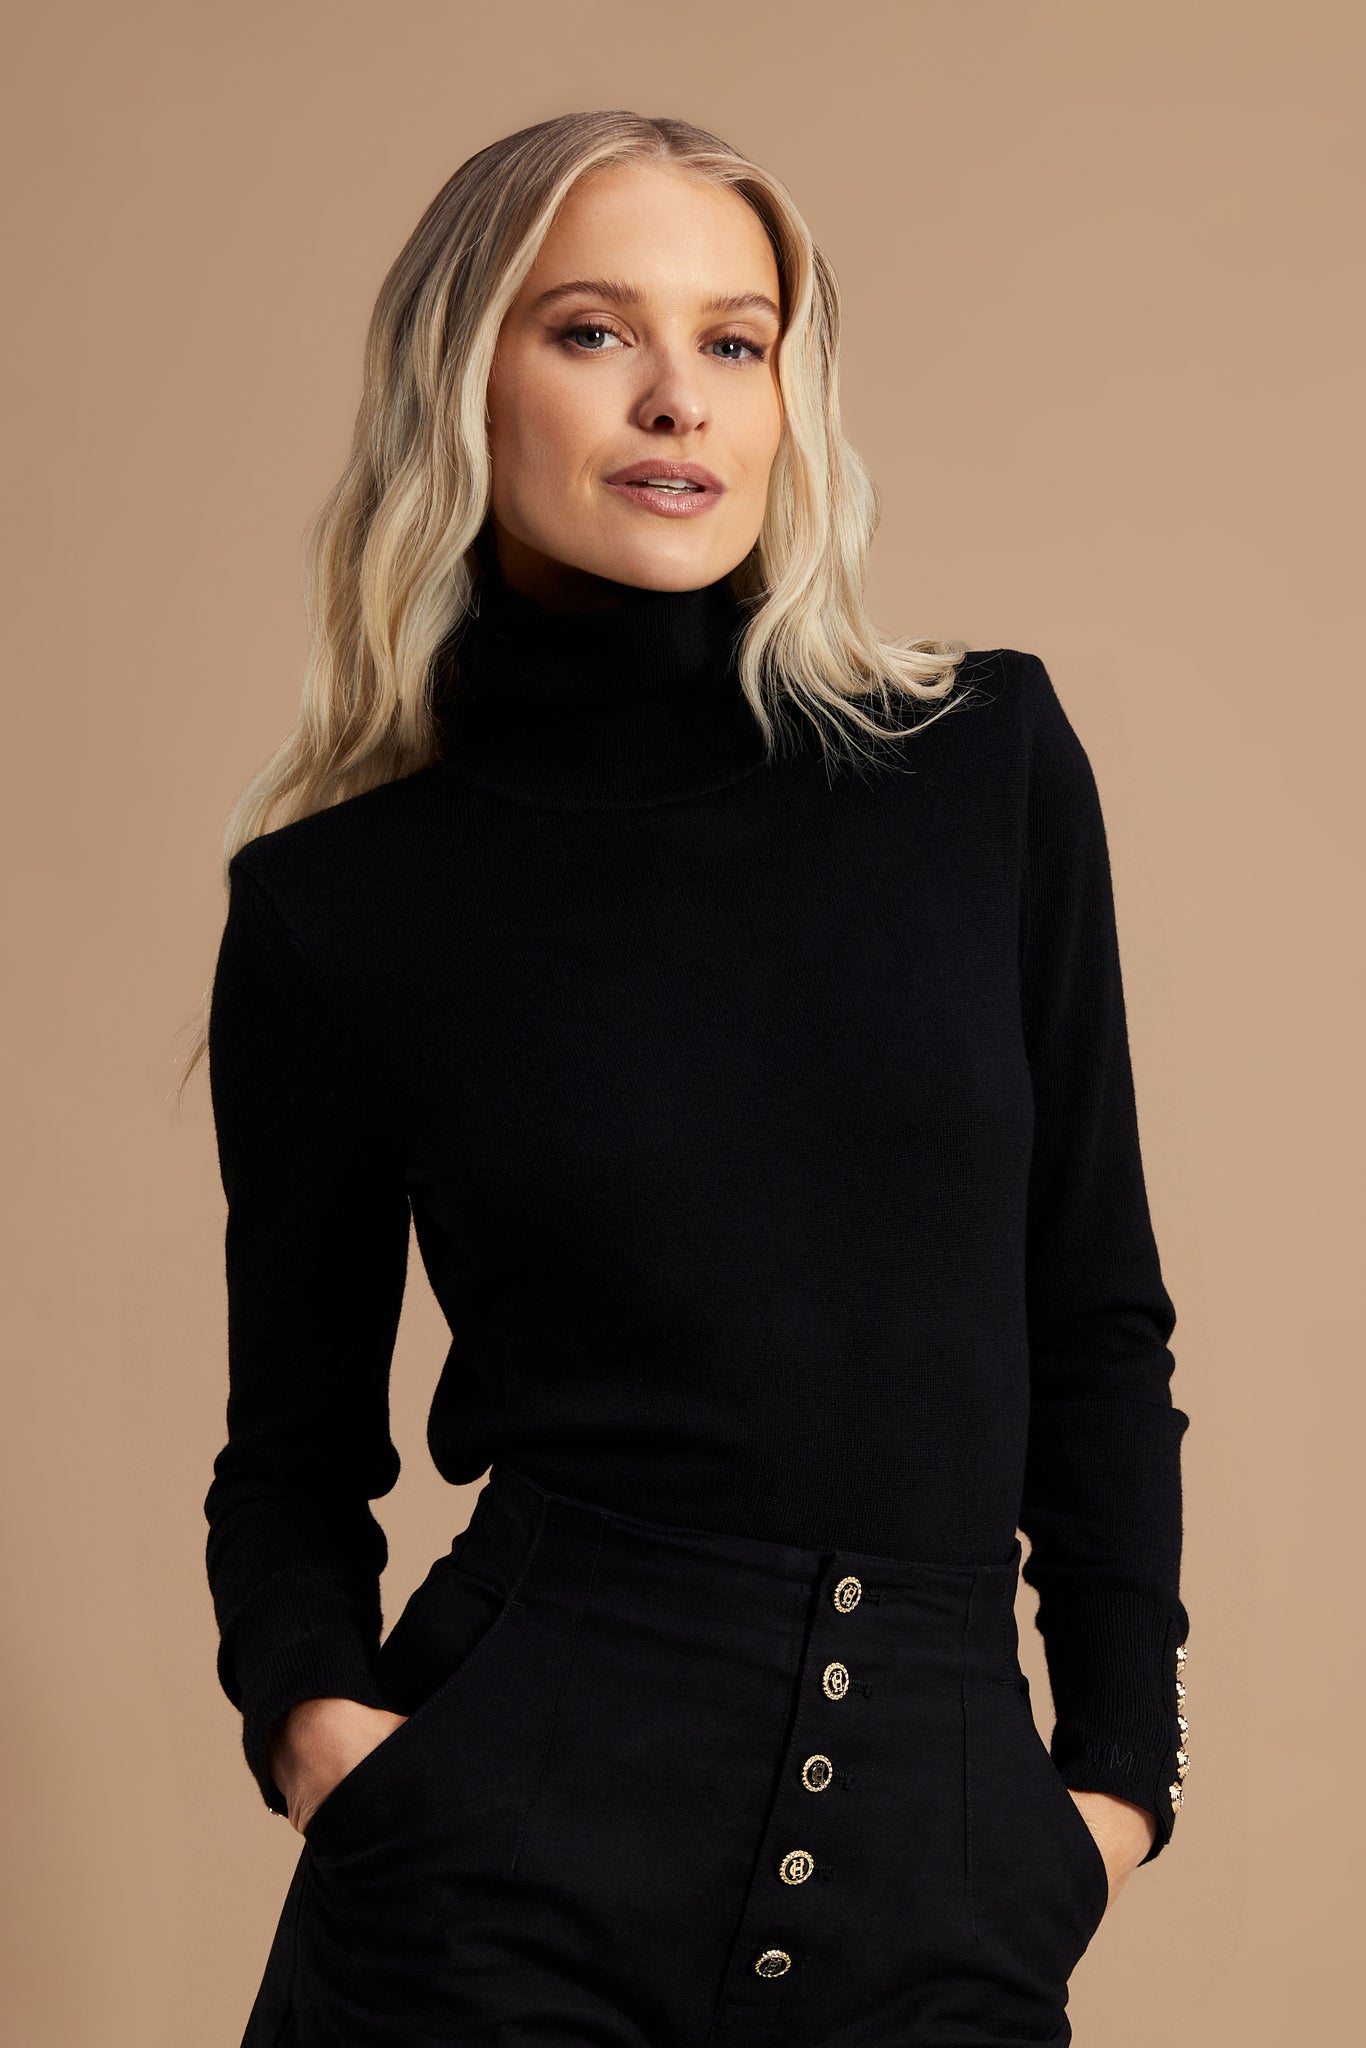 cashmere blend lightweight Roll neck knit in black with shoulder pads 